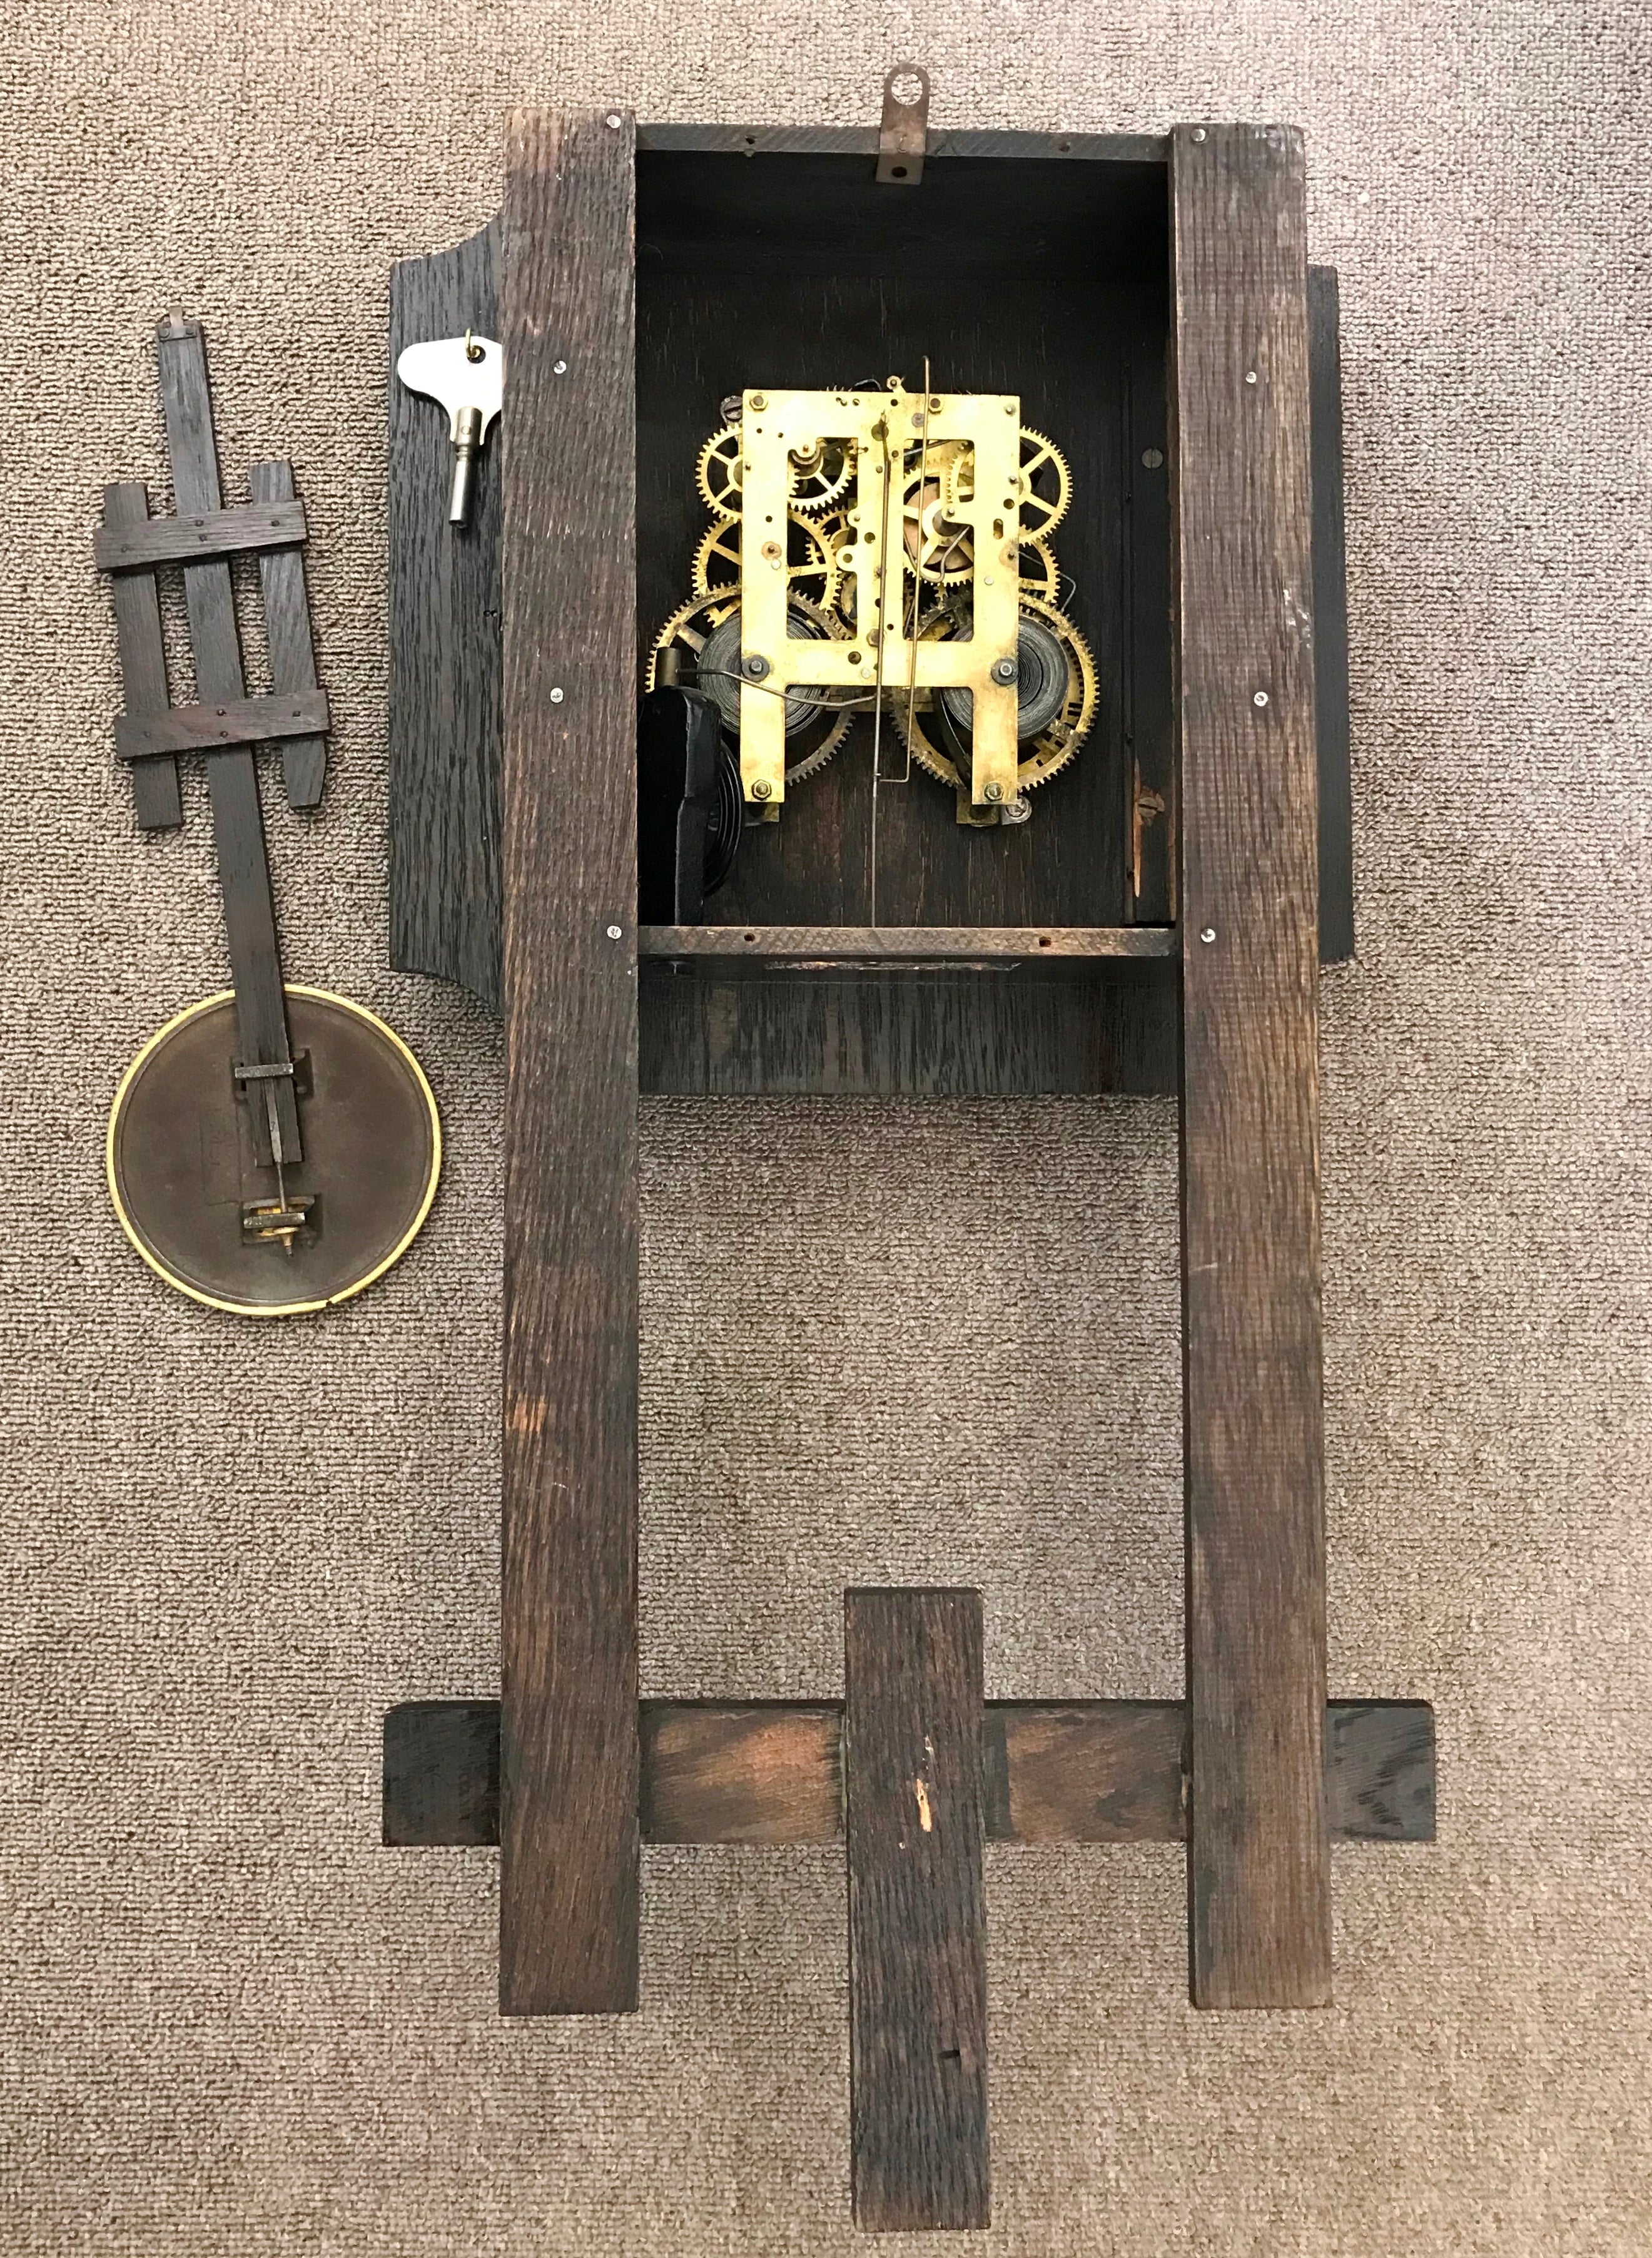 Original Antique Battery Clock | eXibit collection